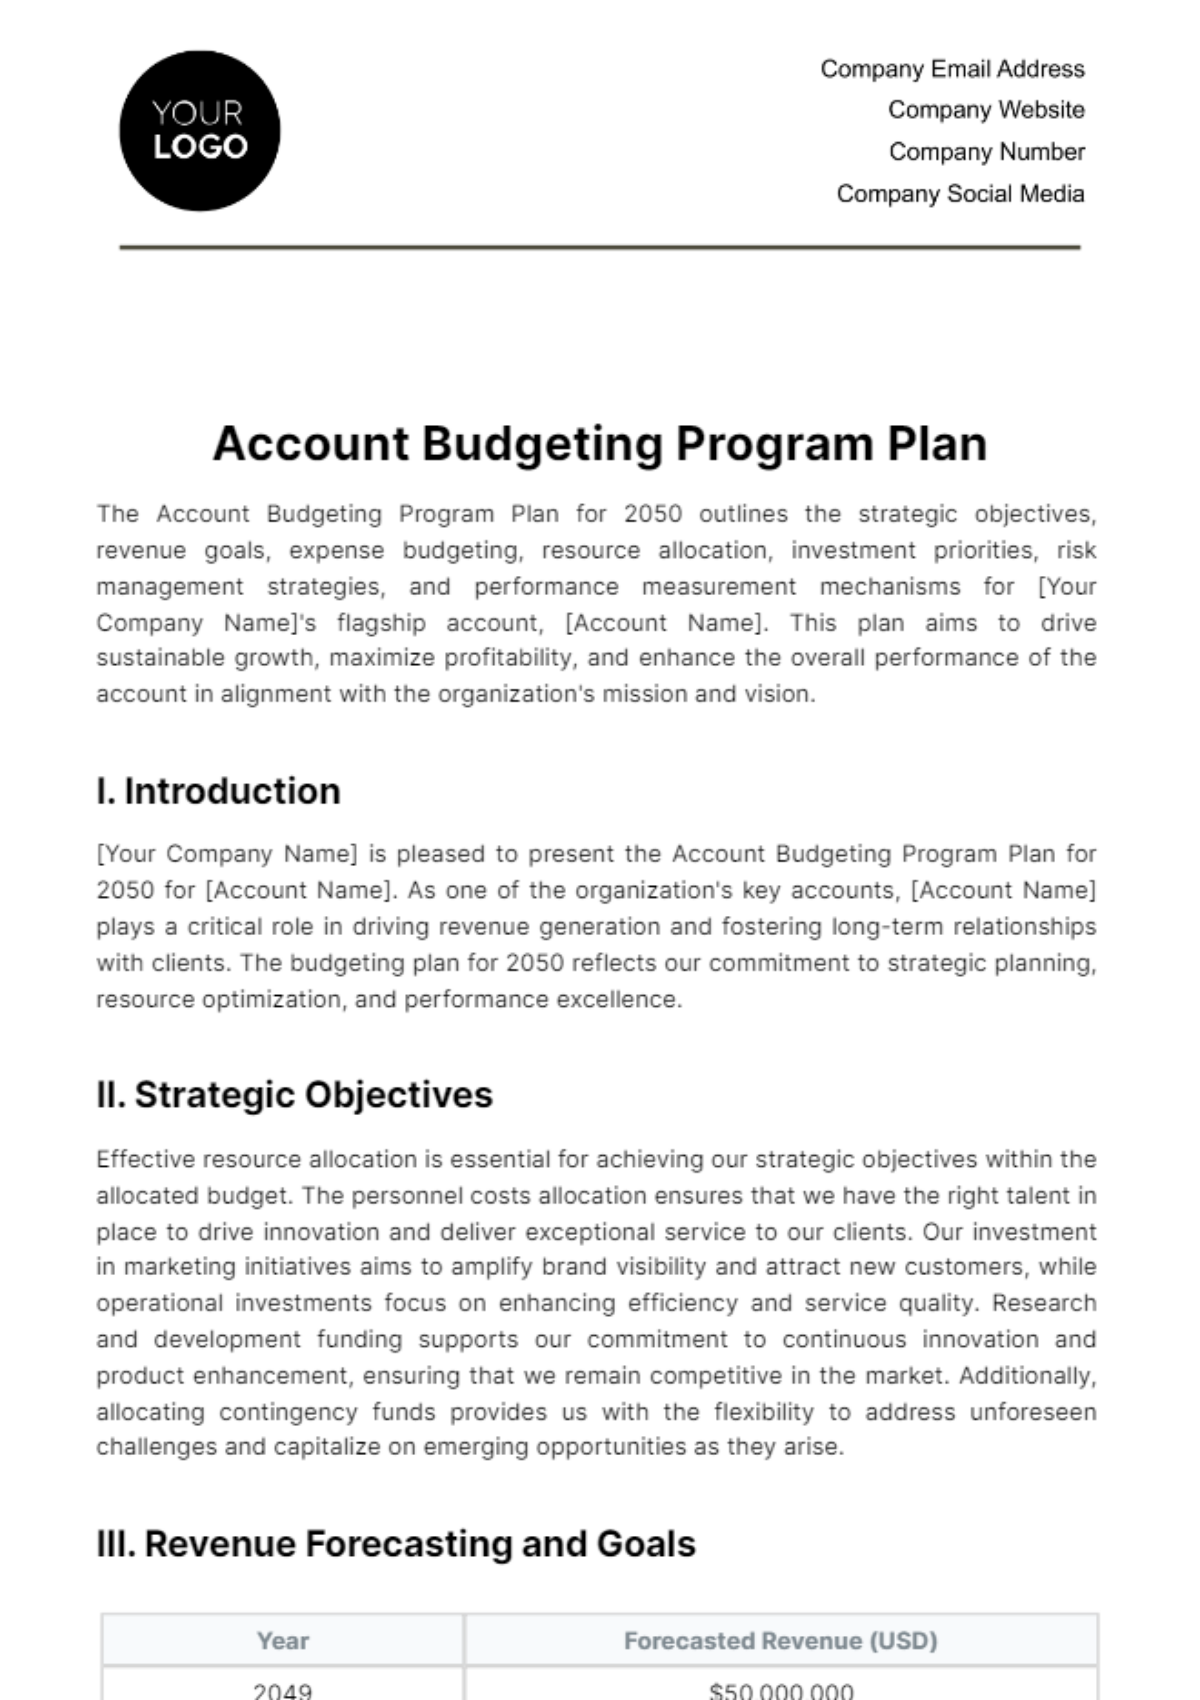 Account Budgeting Program Plan Template